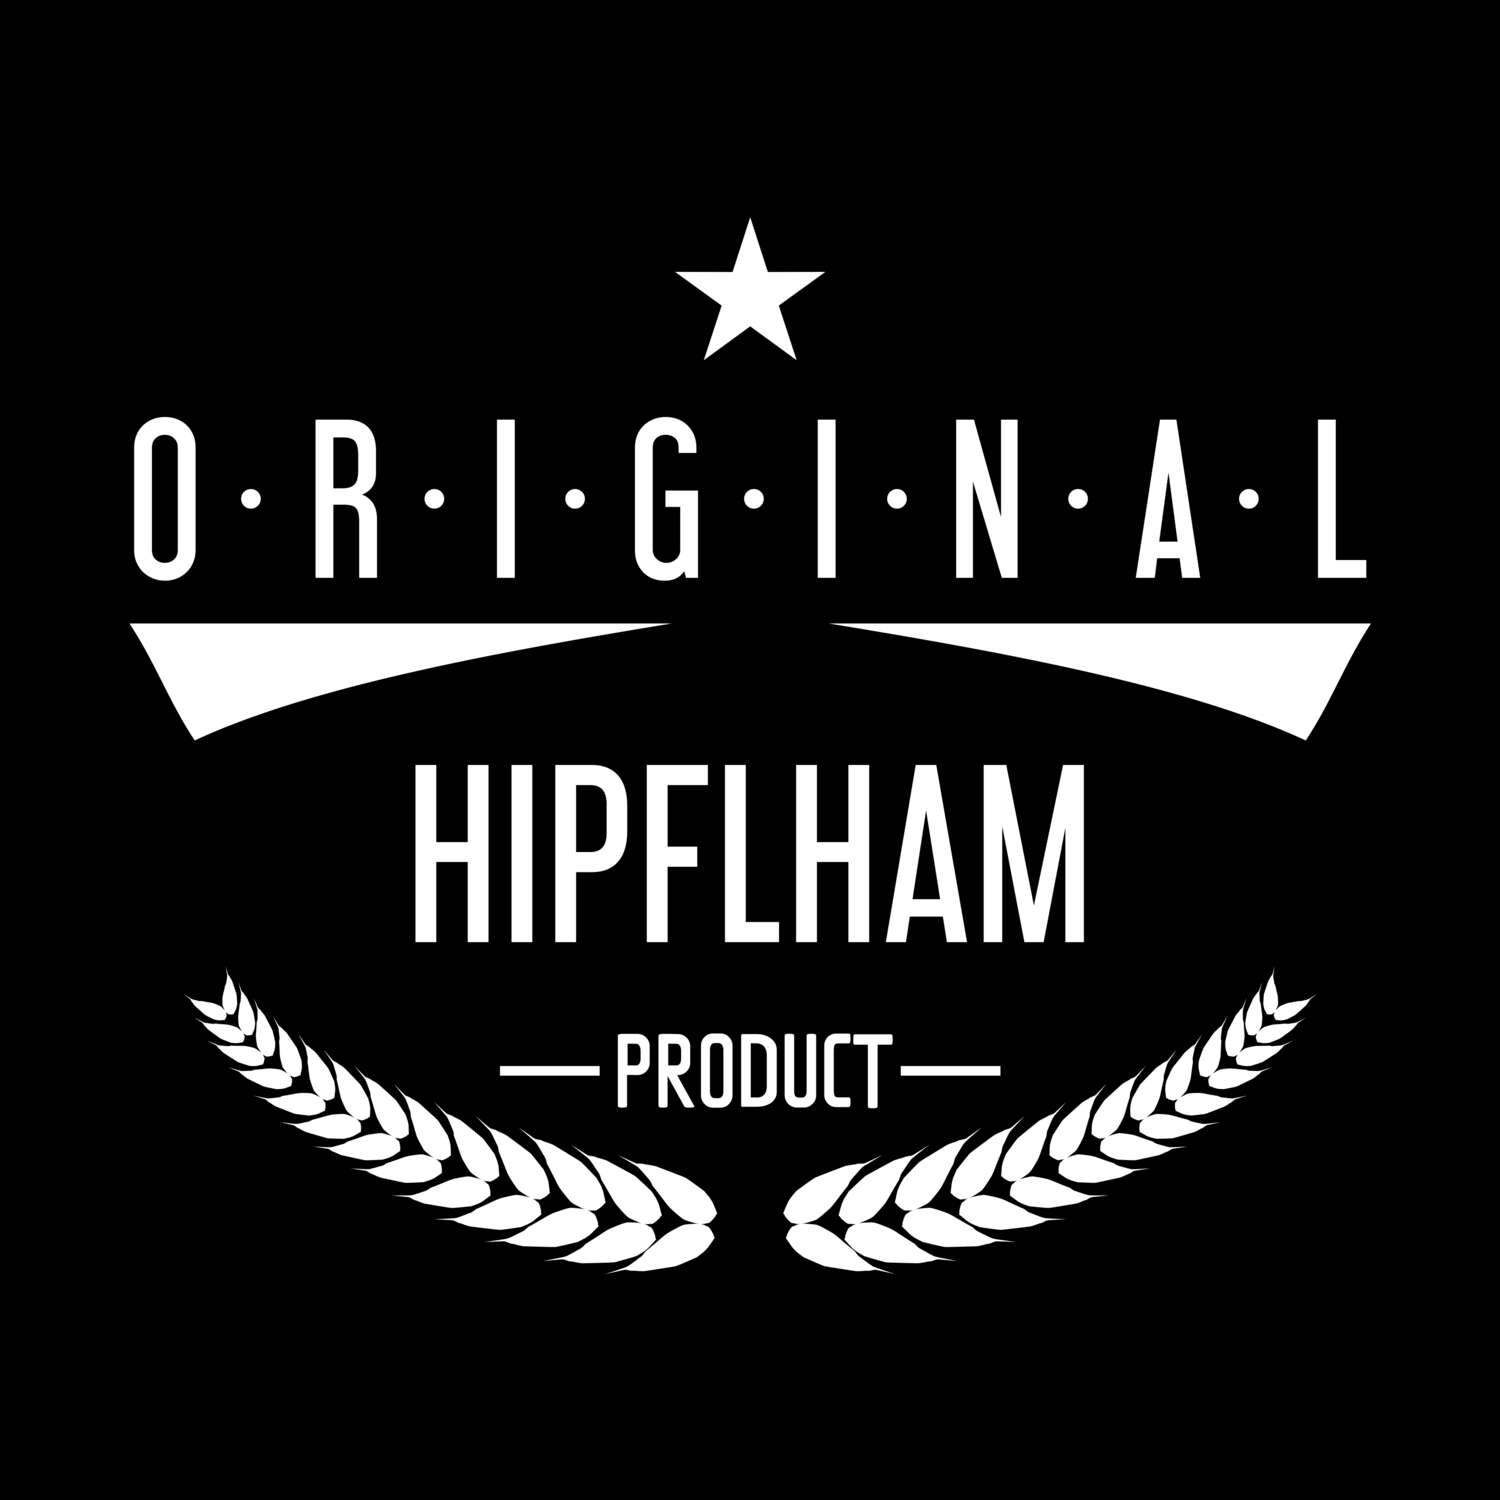 Hipflham T-Shirt »Original Product«